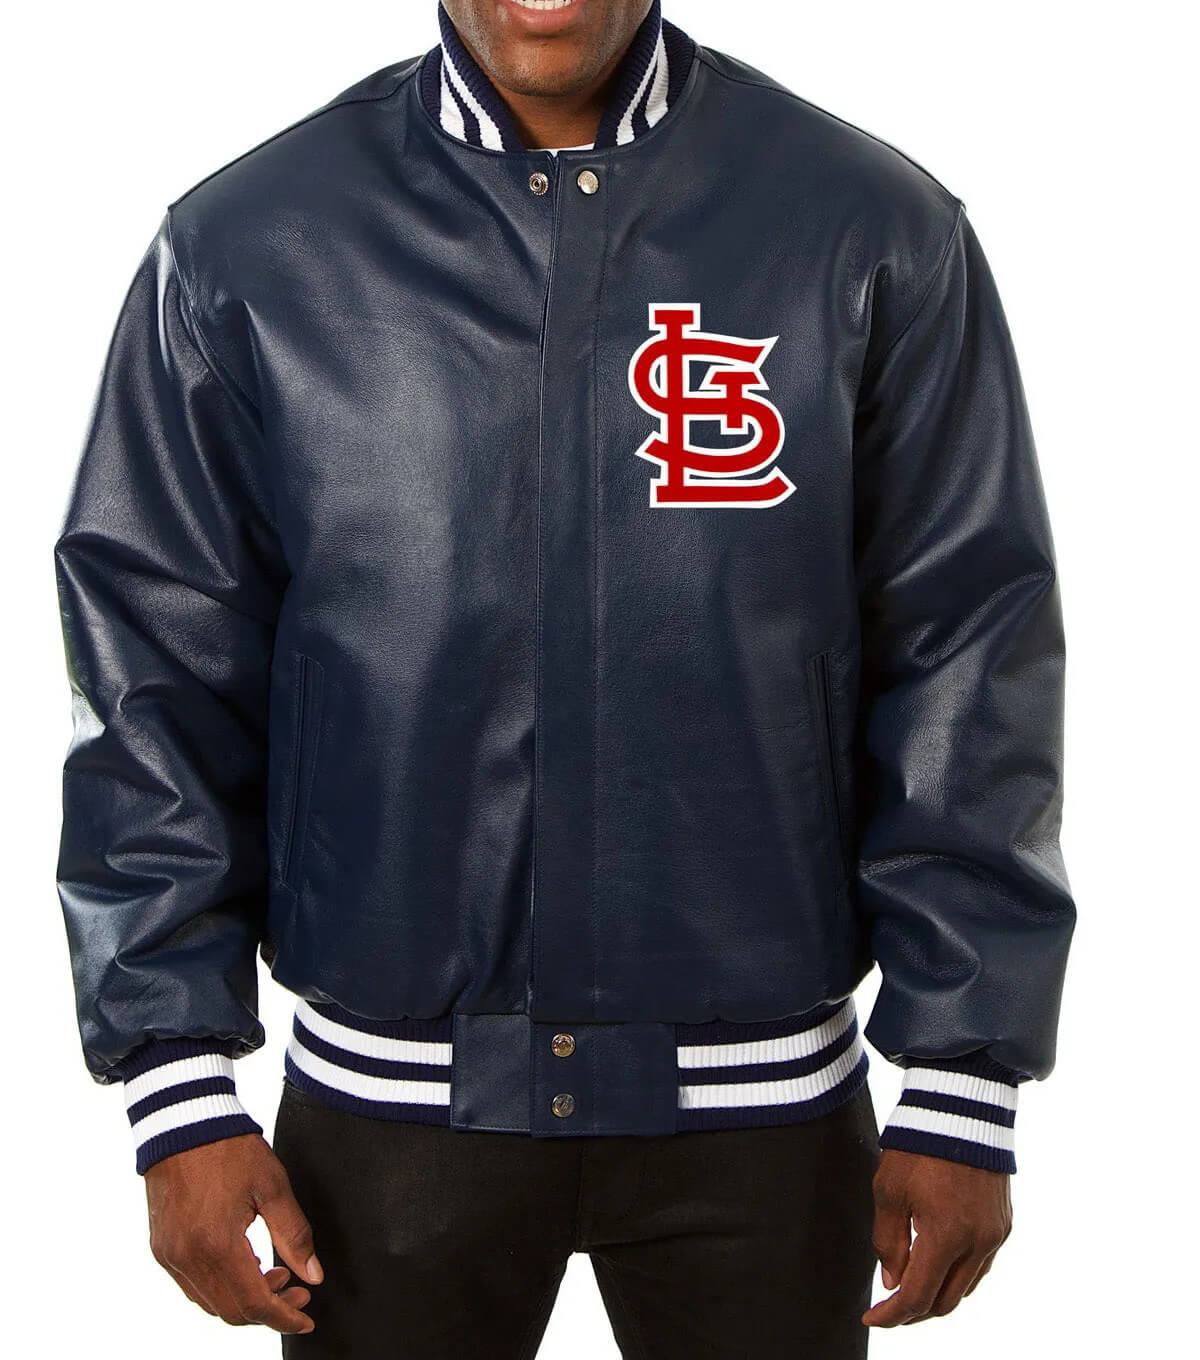 Blue White MLB St. Louis Cardinals Leather Jacket - Maker of Jacket